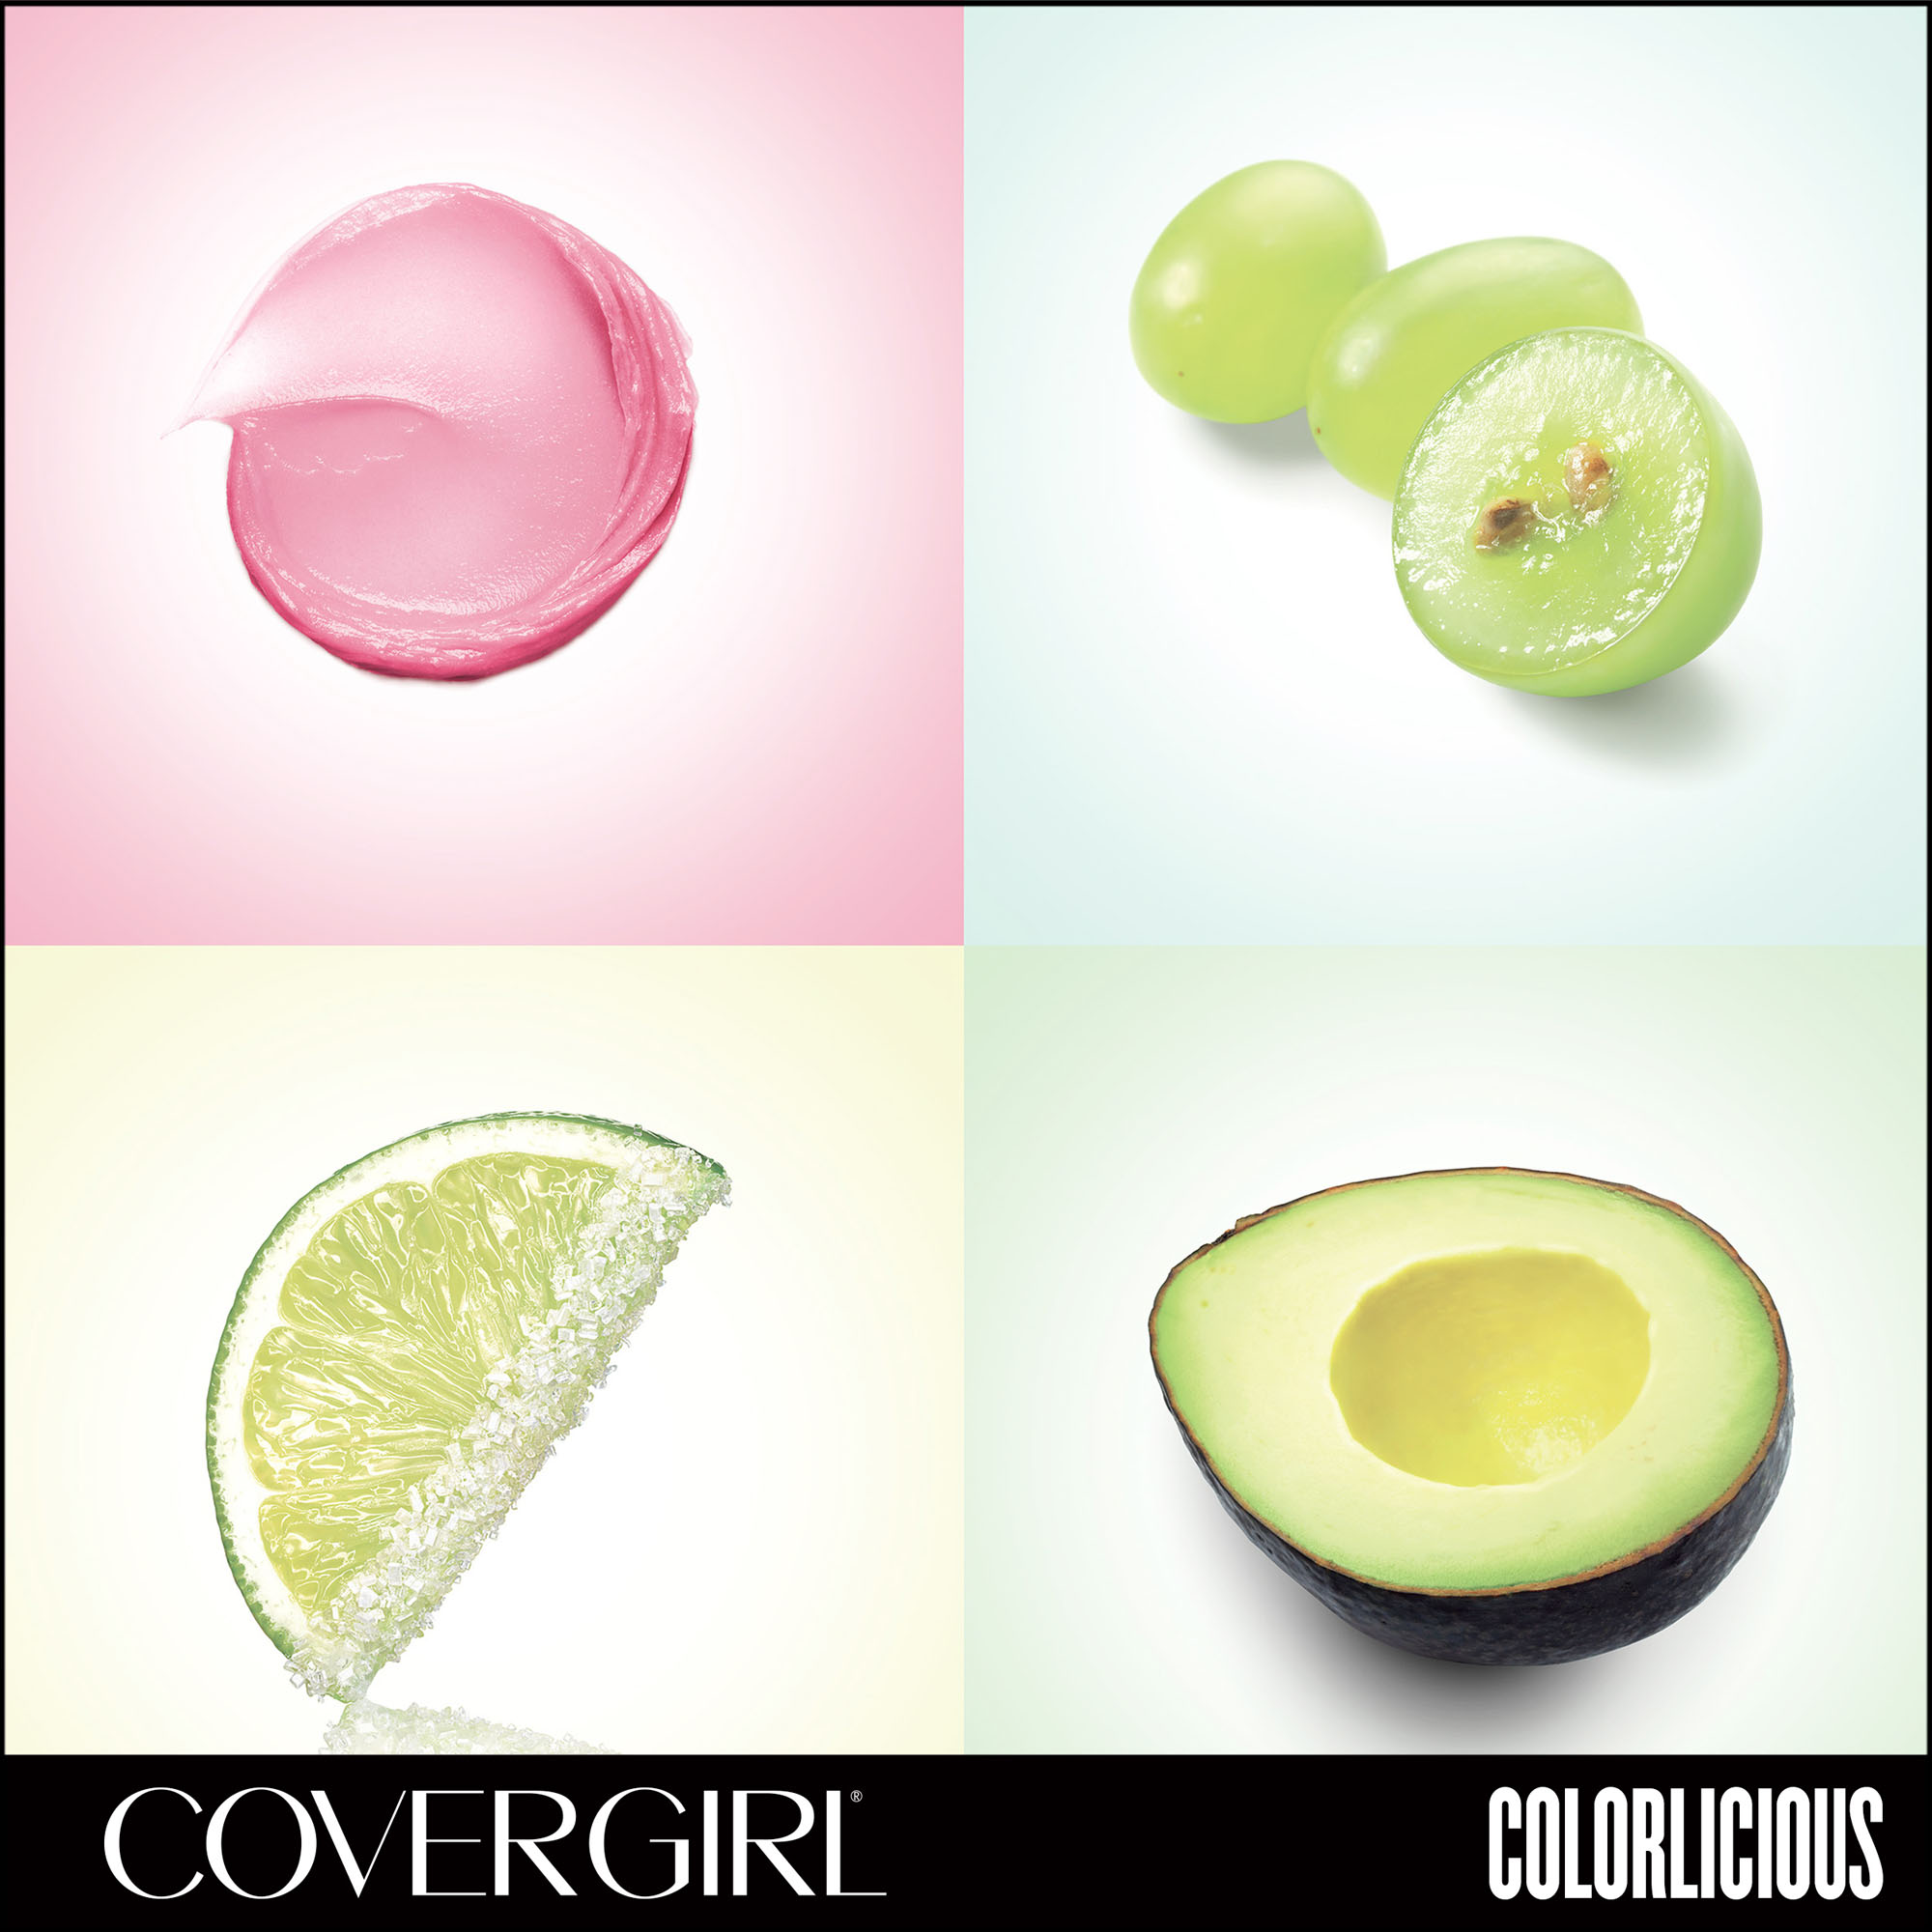 COVERGIRL Colorlicious Oh Sugar! Vitamin Infused Lip Balm, Caramel, 0.12 oz (3.5 g) - image 5 of 8